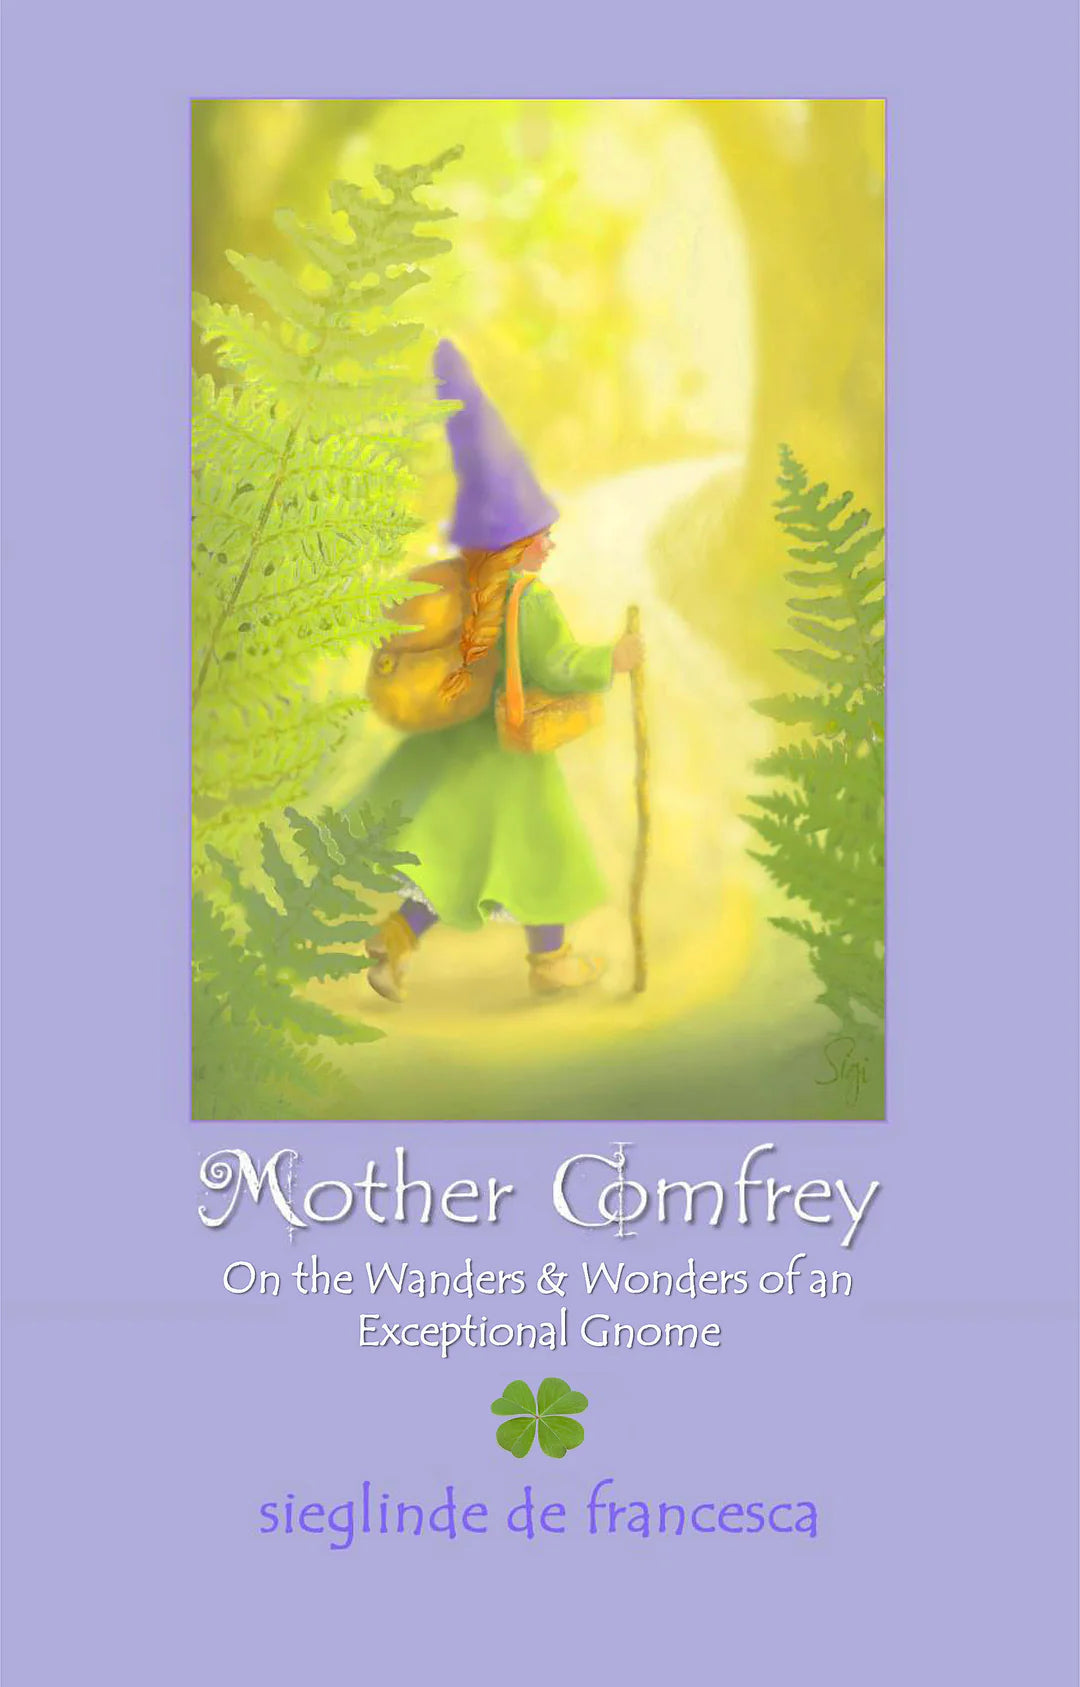 Mother Comfrey by Sieglinde de Francesca - Alder & Alouette